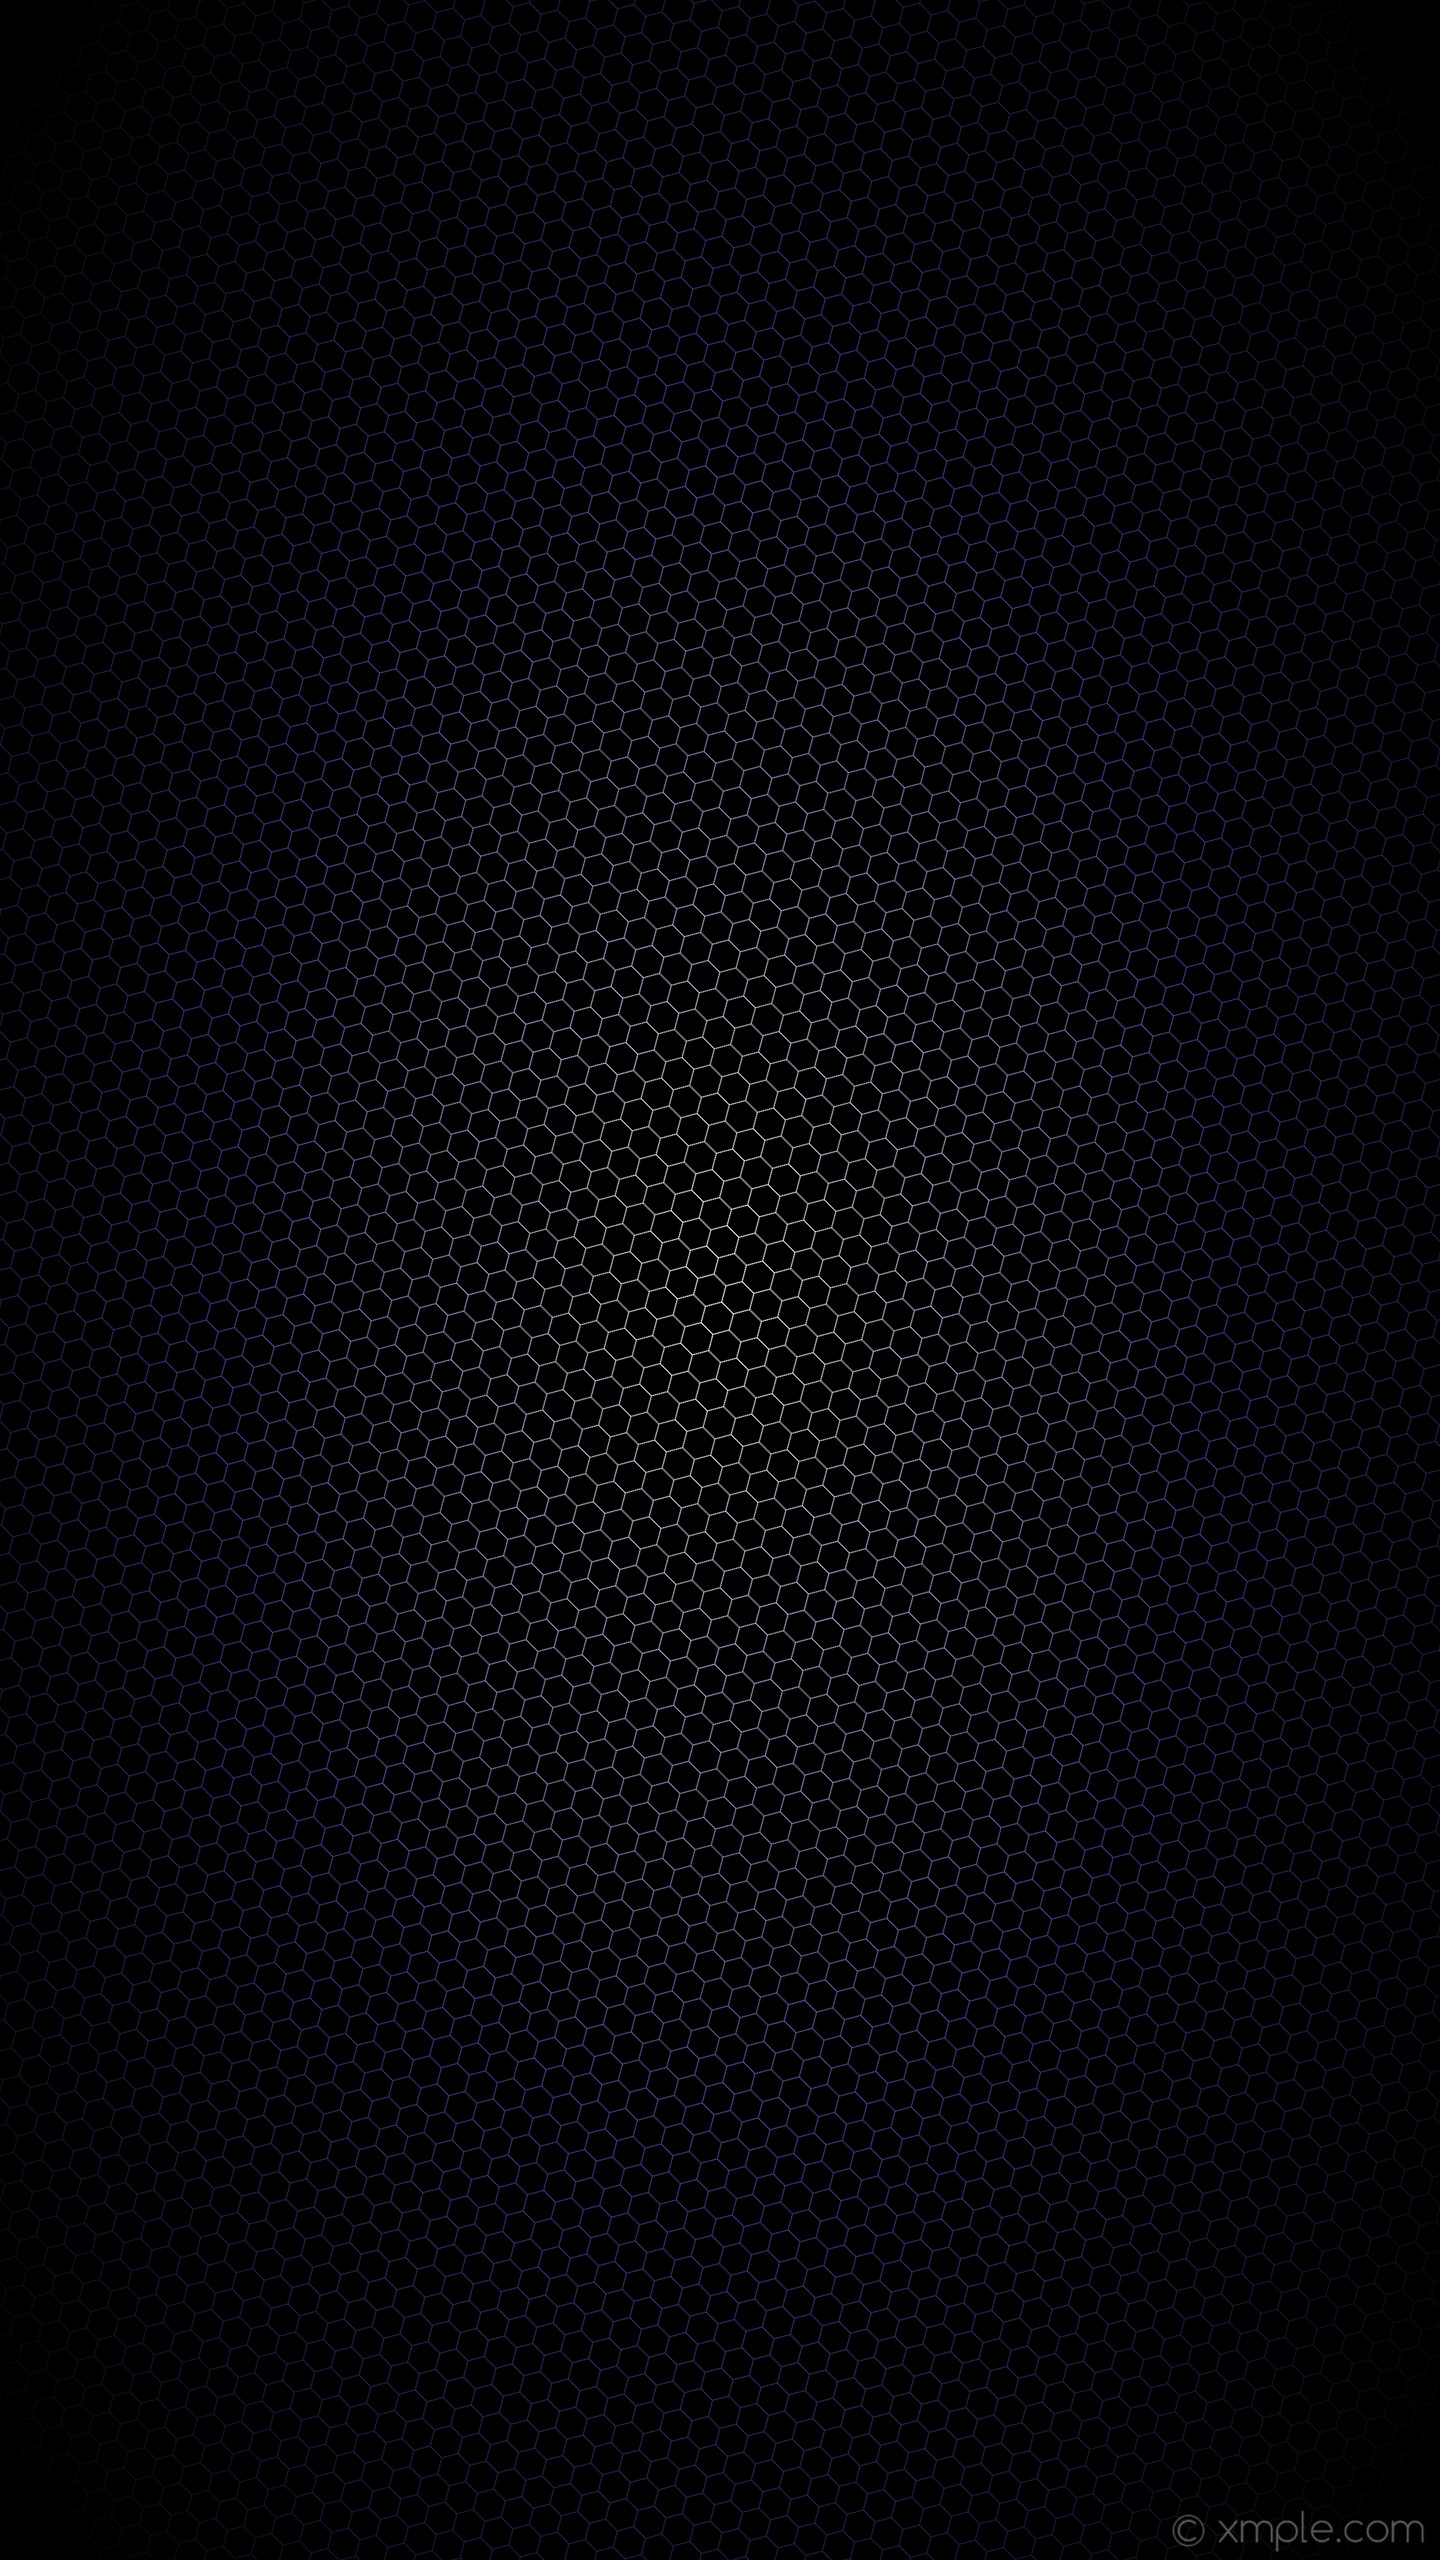 1440x2560 wallpaper black white hexagon purple glow gradient dark slate blue #000000  #ffffff #483d8b